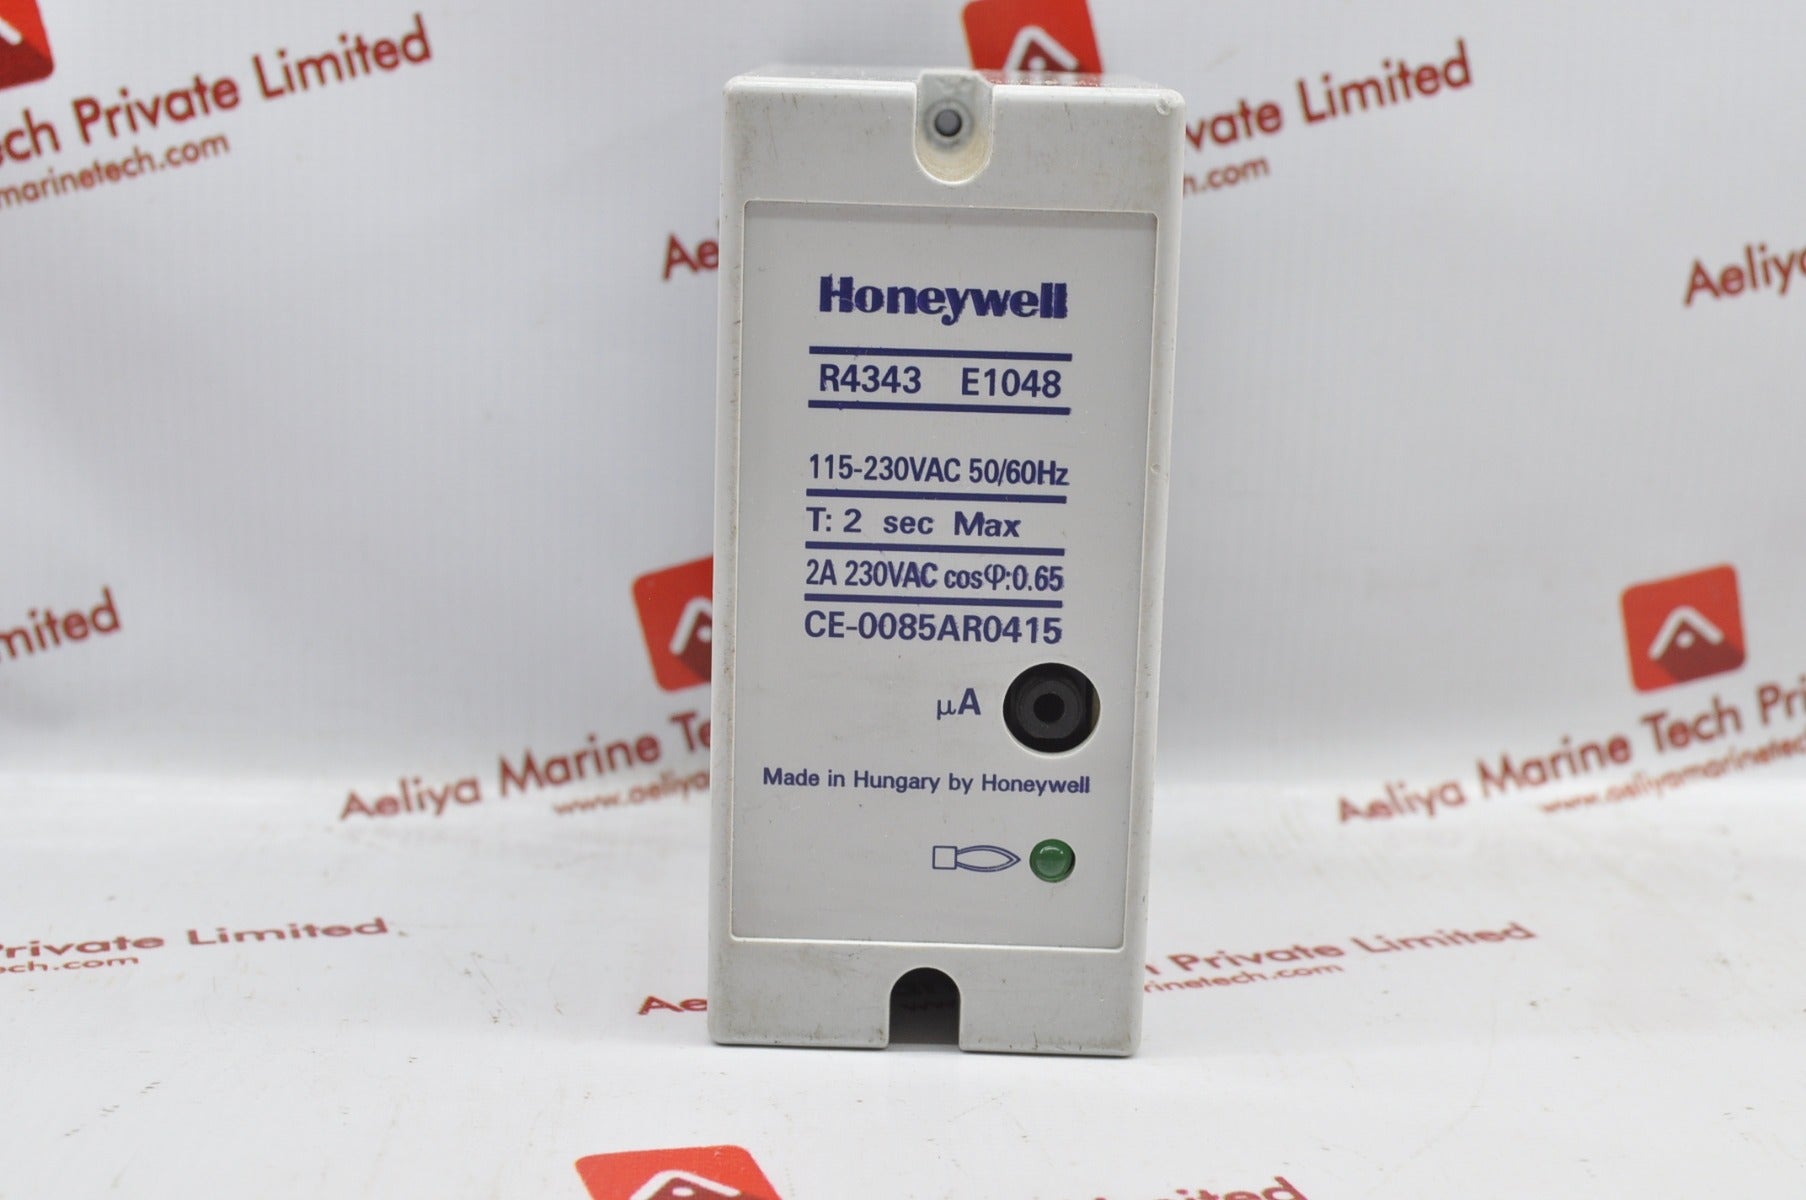 Honeywell r4343 e1048 controller t2 sec max